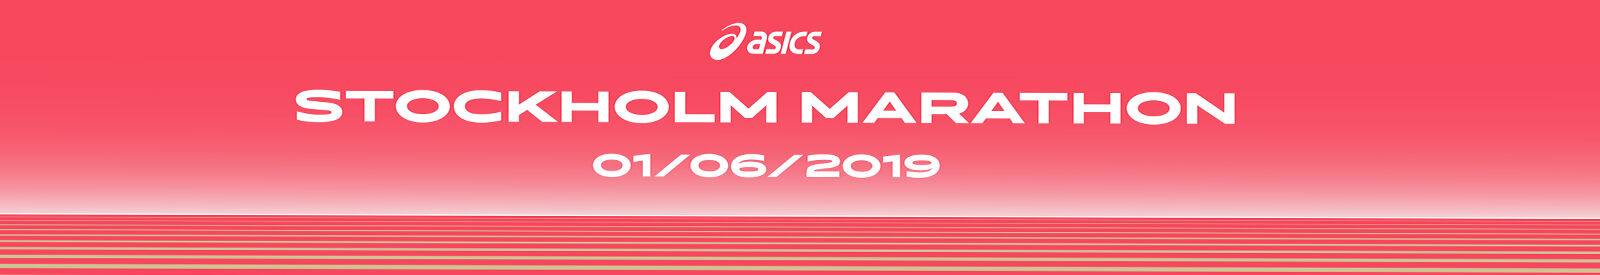 Stockholm Marathon | ASICS